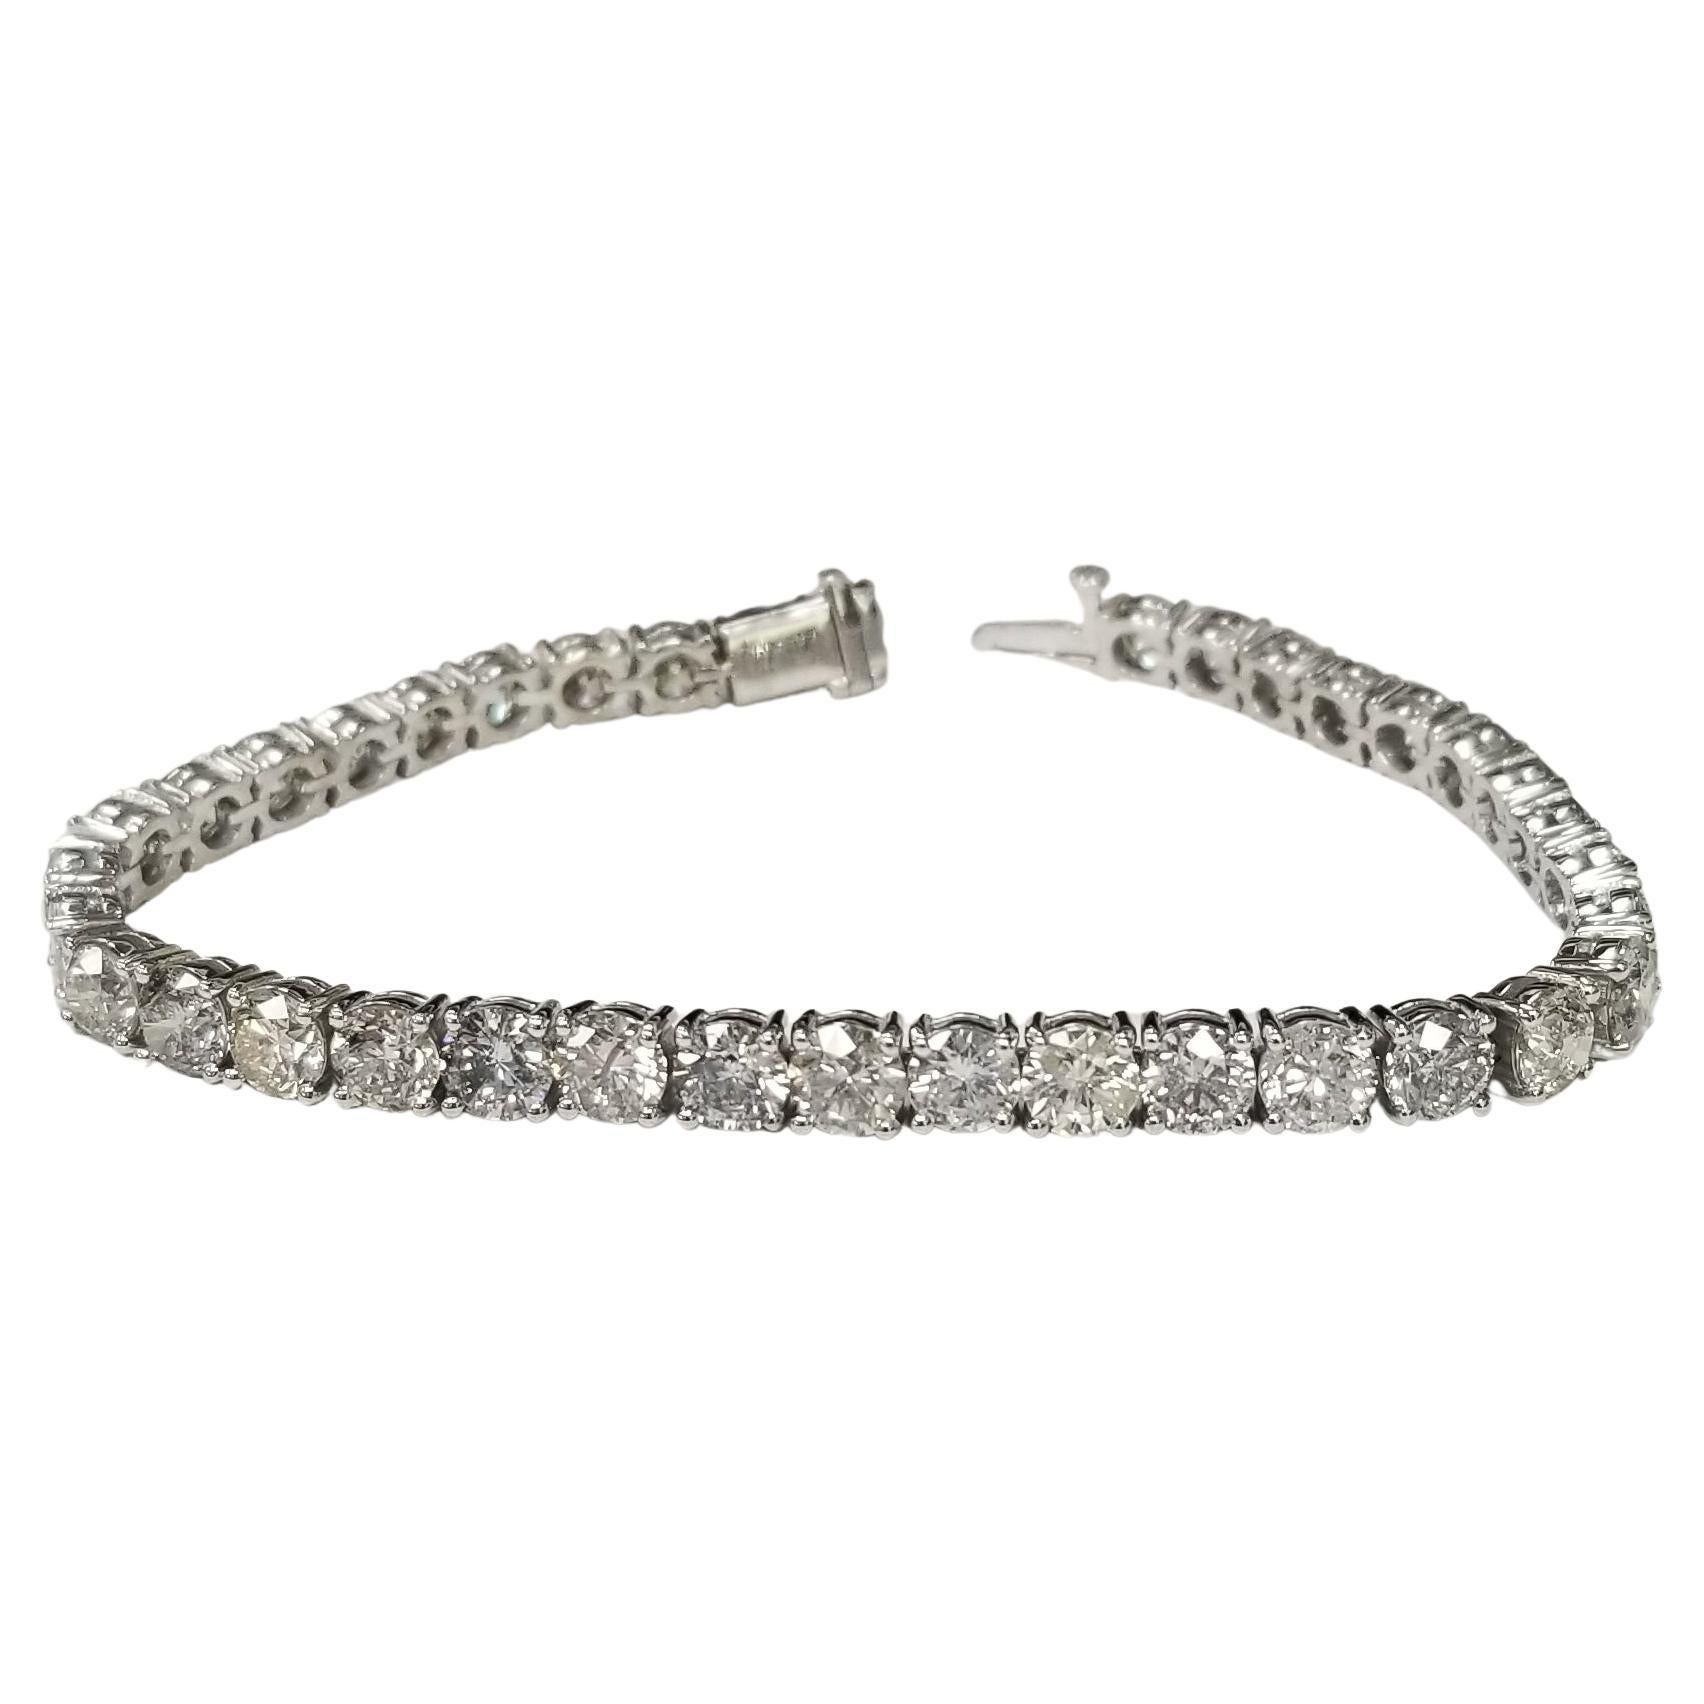 Diamond Tennis Bracelet with 15.03 Carats Set in 14k White Gold Setting